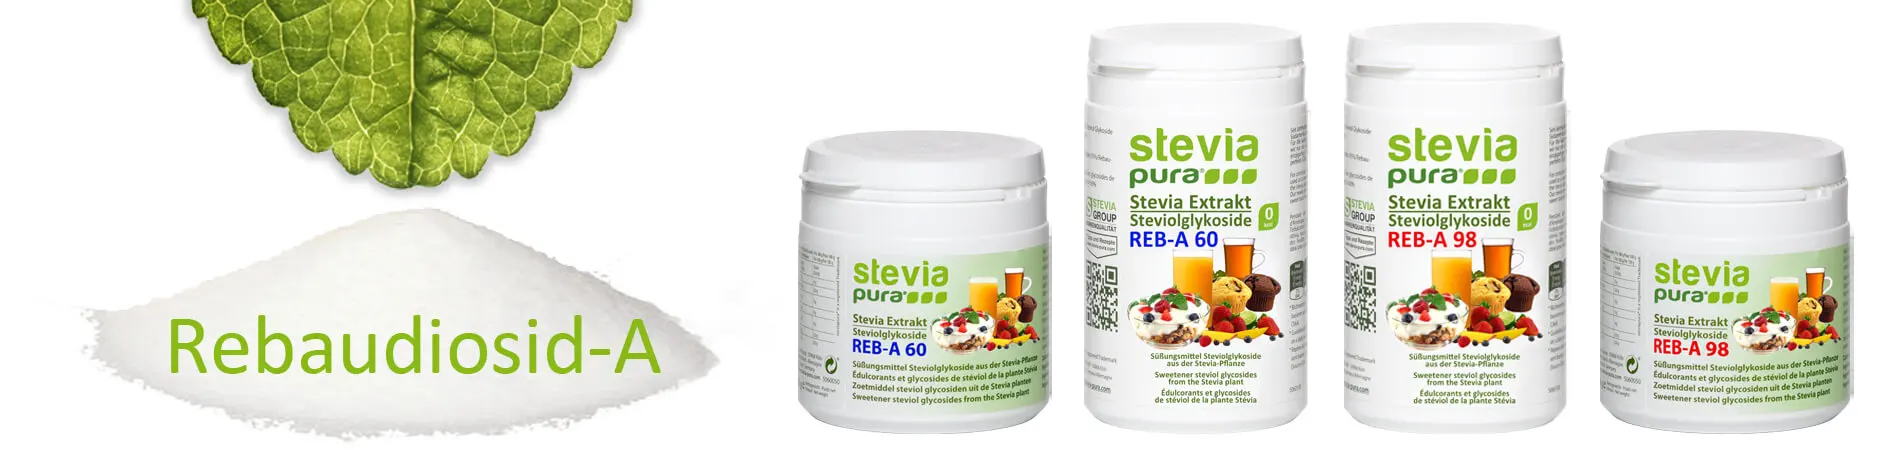 Rebaudioside-A: Pure Stevia Powder Steviol Glycosides